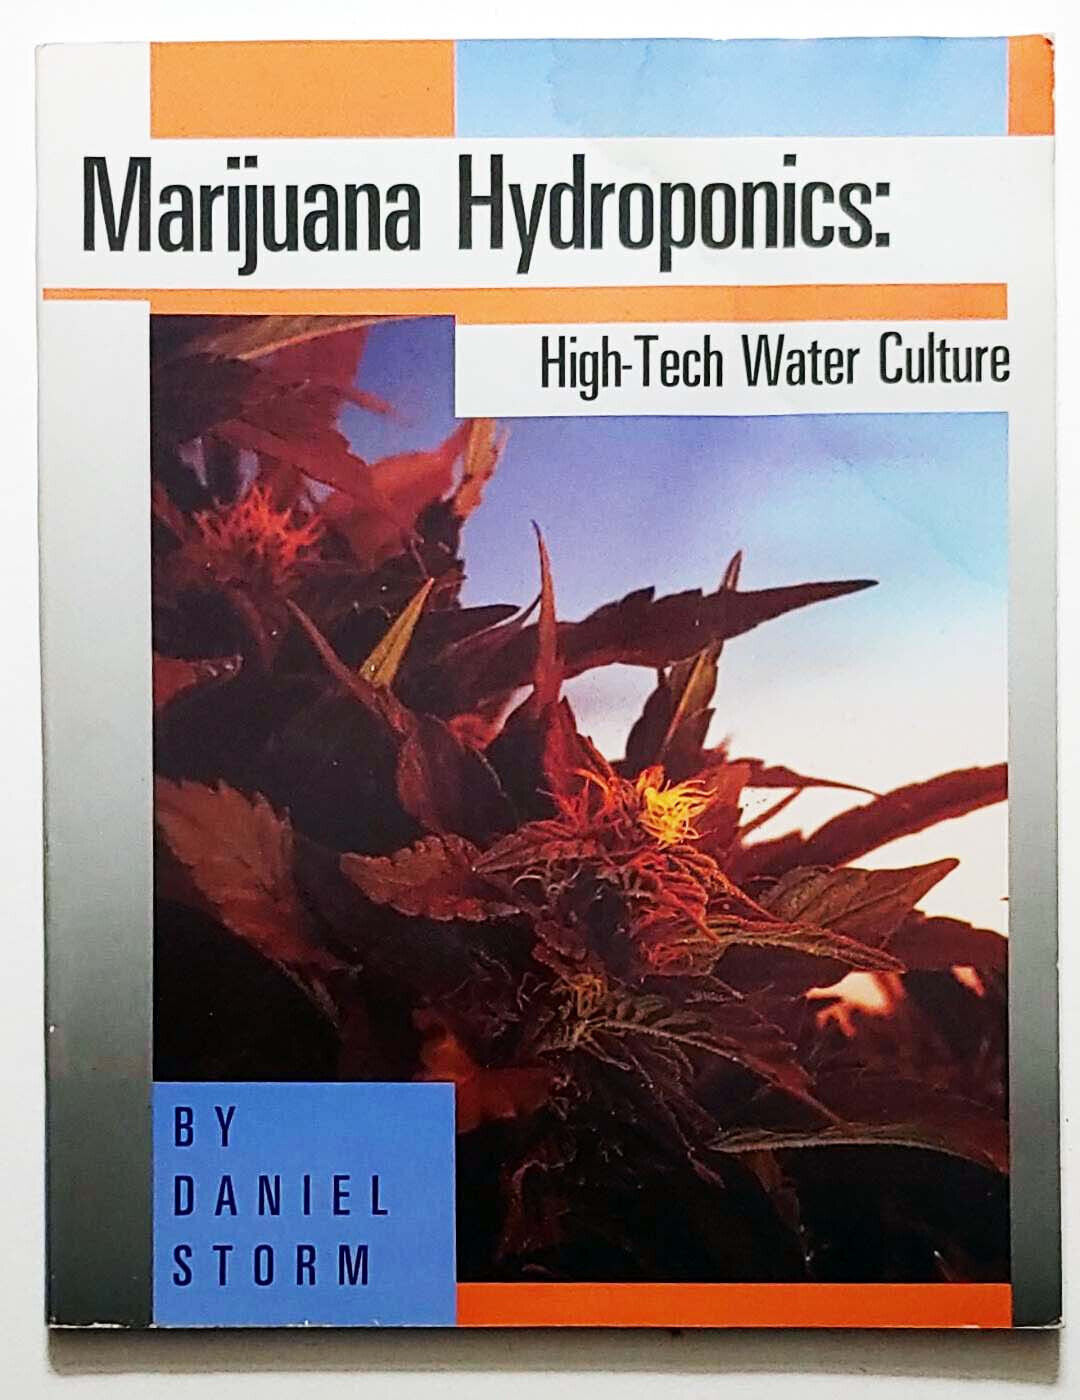 Marijuana hydroponics: High-Tech Water Culture 1987 Paperback by Daniel E Storm